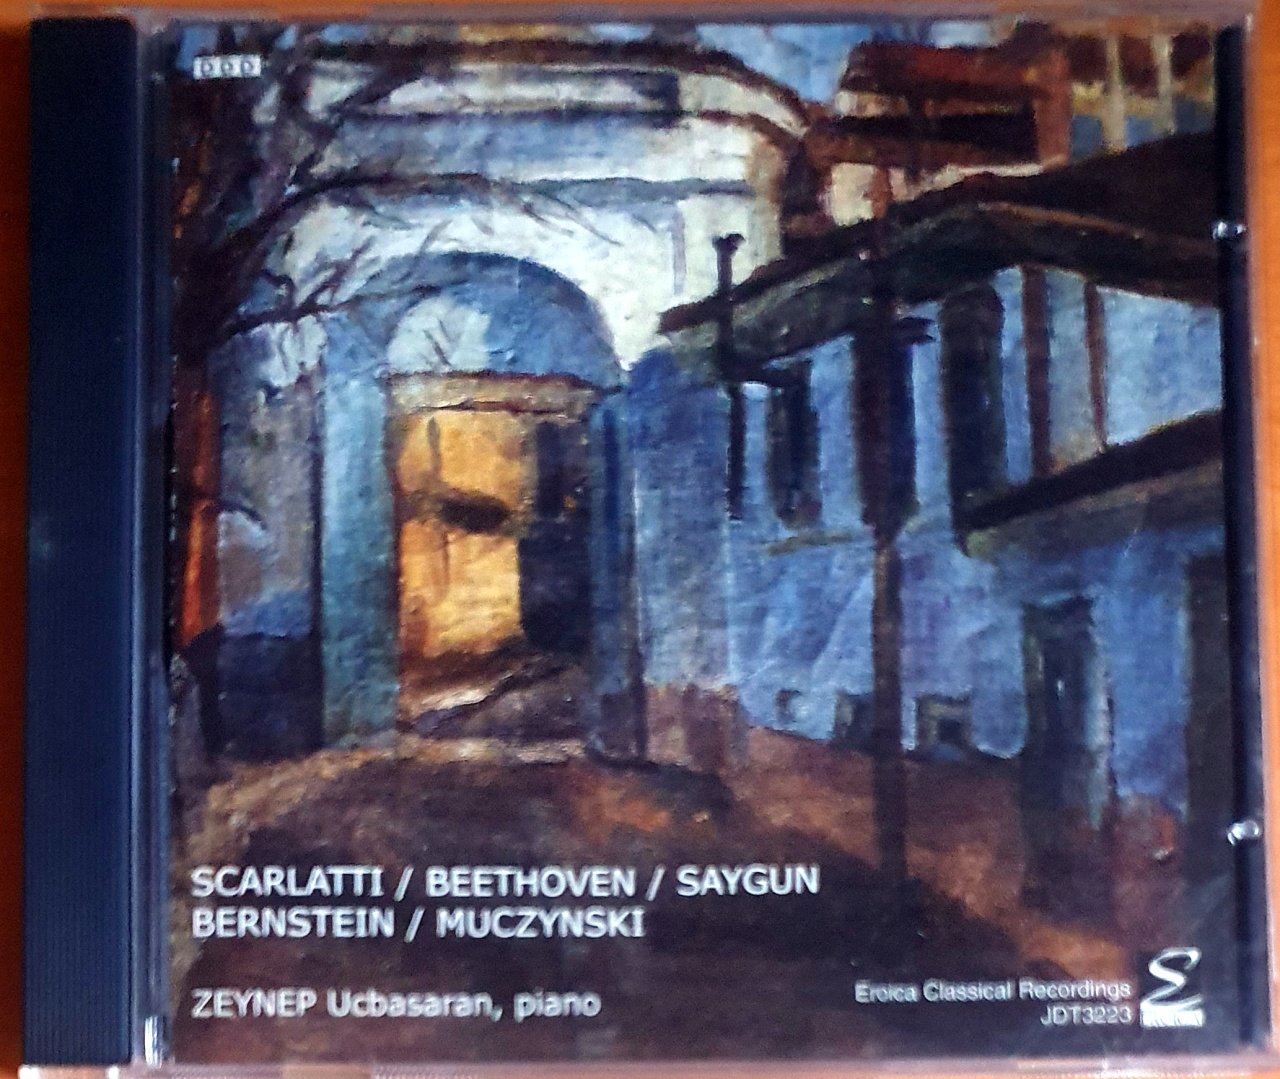 SCARLATTI / BEETHOVEN / SAYGUN / BERNSTEIN / MUCZYNSKI / ZEYNEP UCBASARAN PIANO (2005) - CD 2.EL